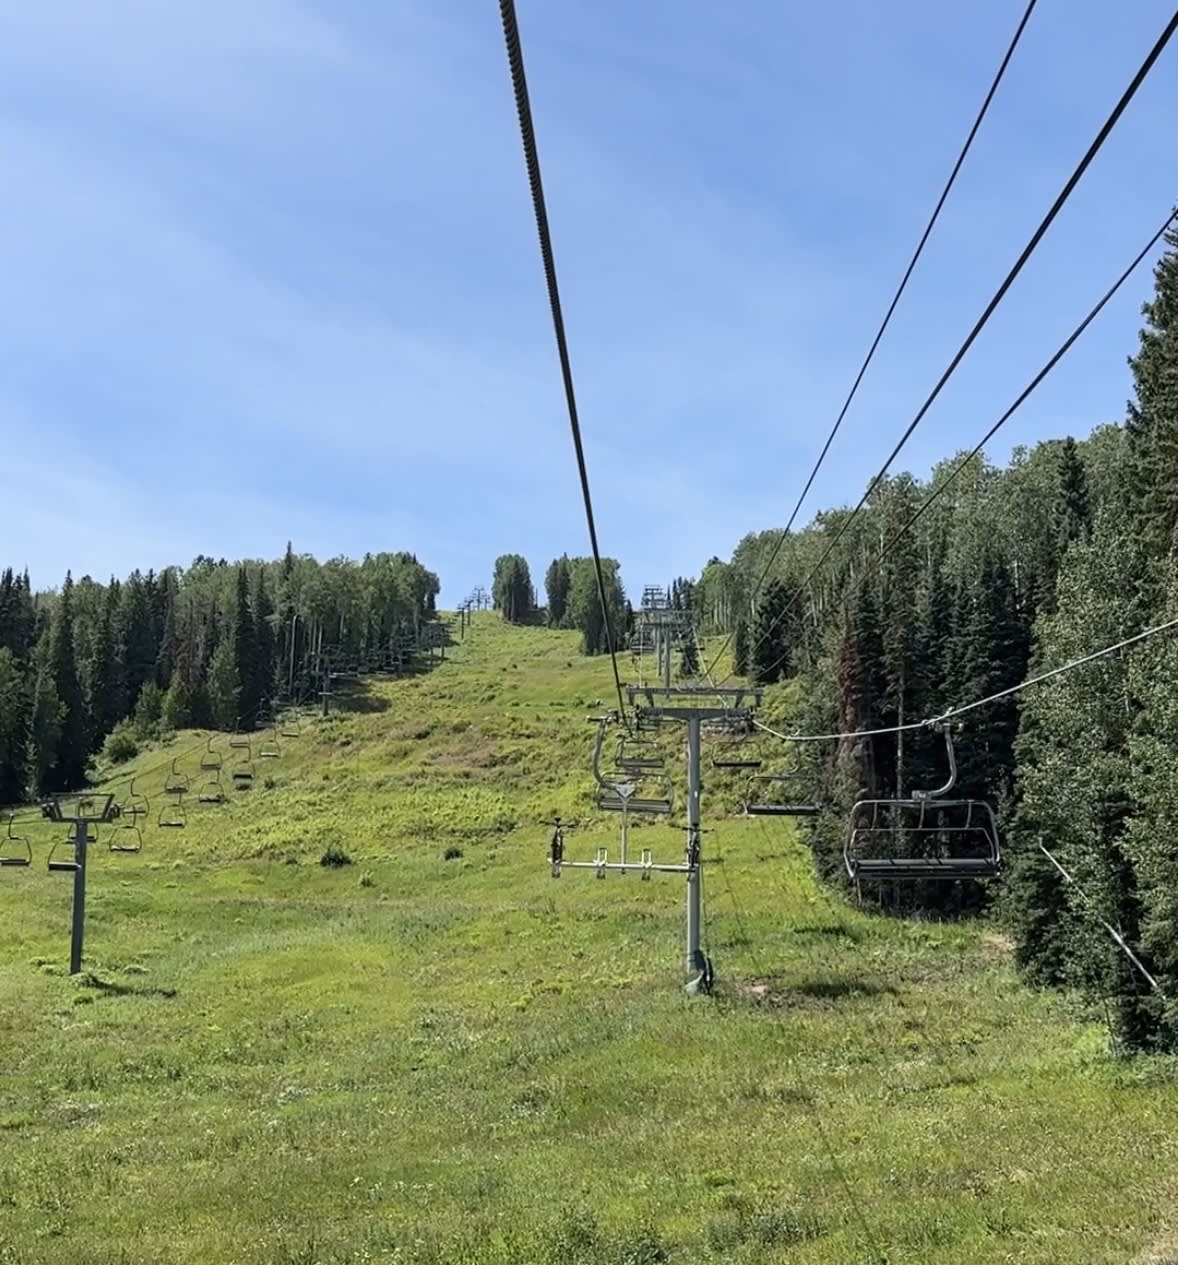 Summer Lift at Purgatory Ski Resort